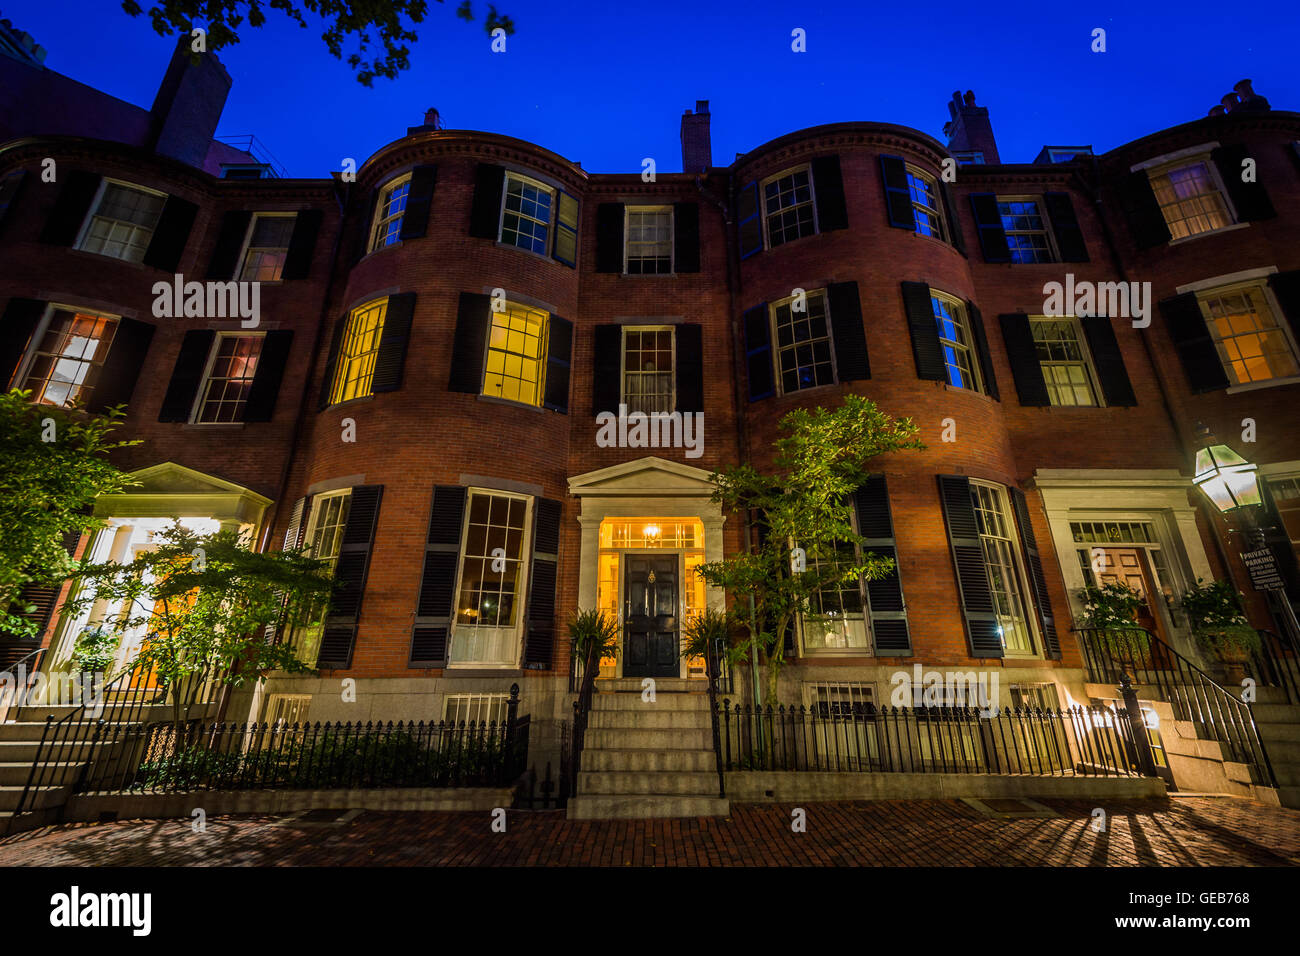 Historic brick homes in Beacon Hill at night, in Boston, Massachusetts. Stock Photo